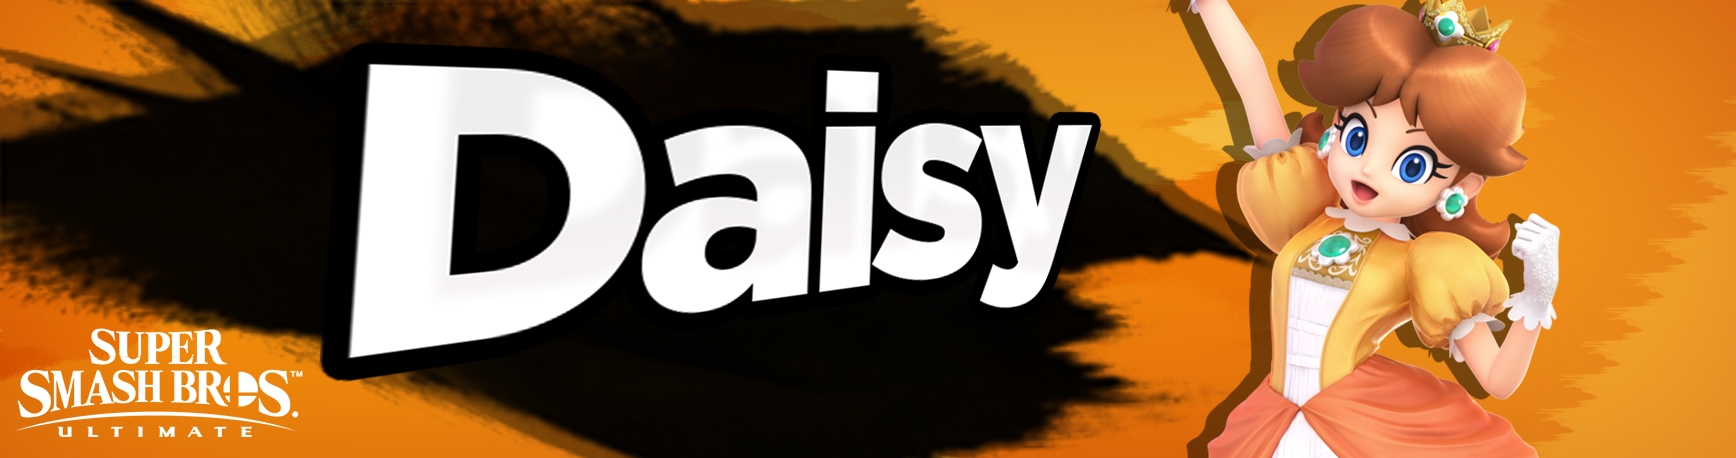 Banner Daisy Nr 71 - Super Smash Bros series